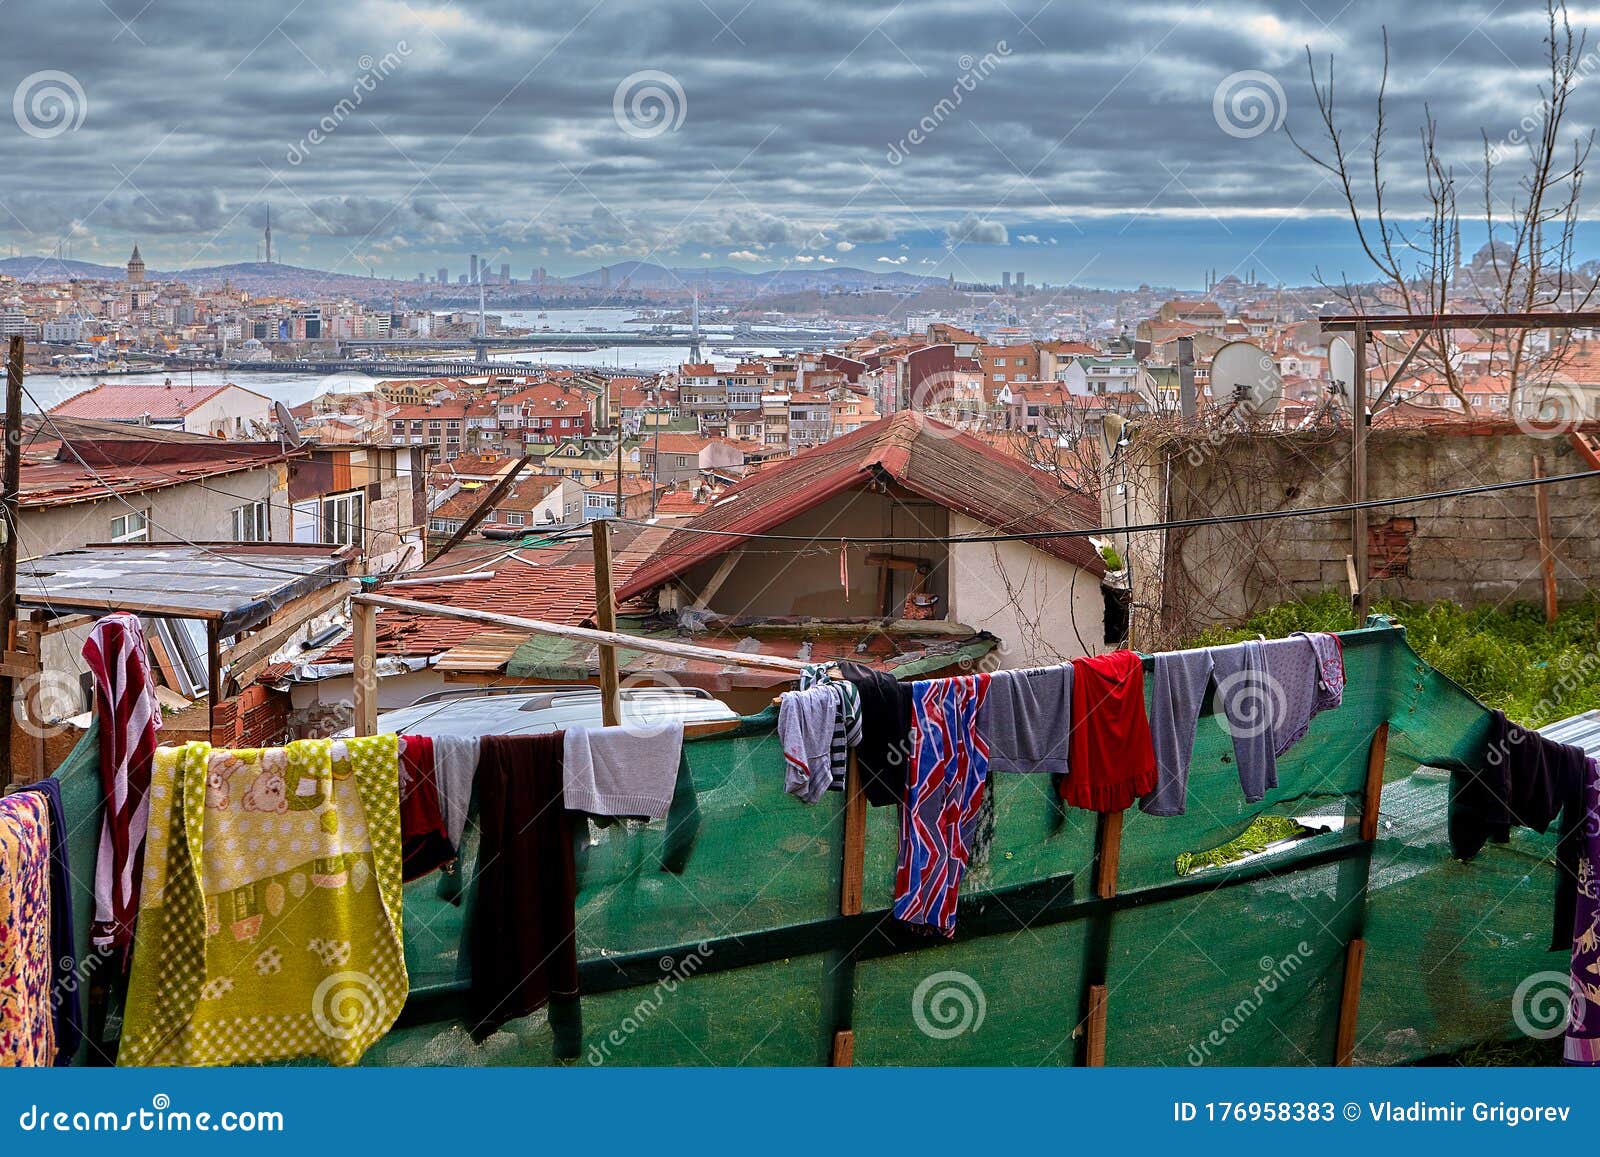 slum tourism turkey